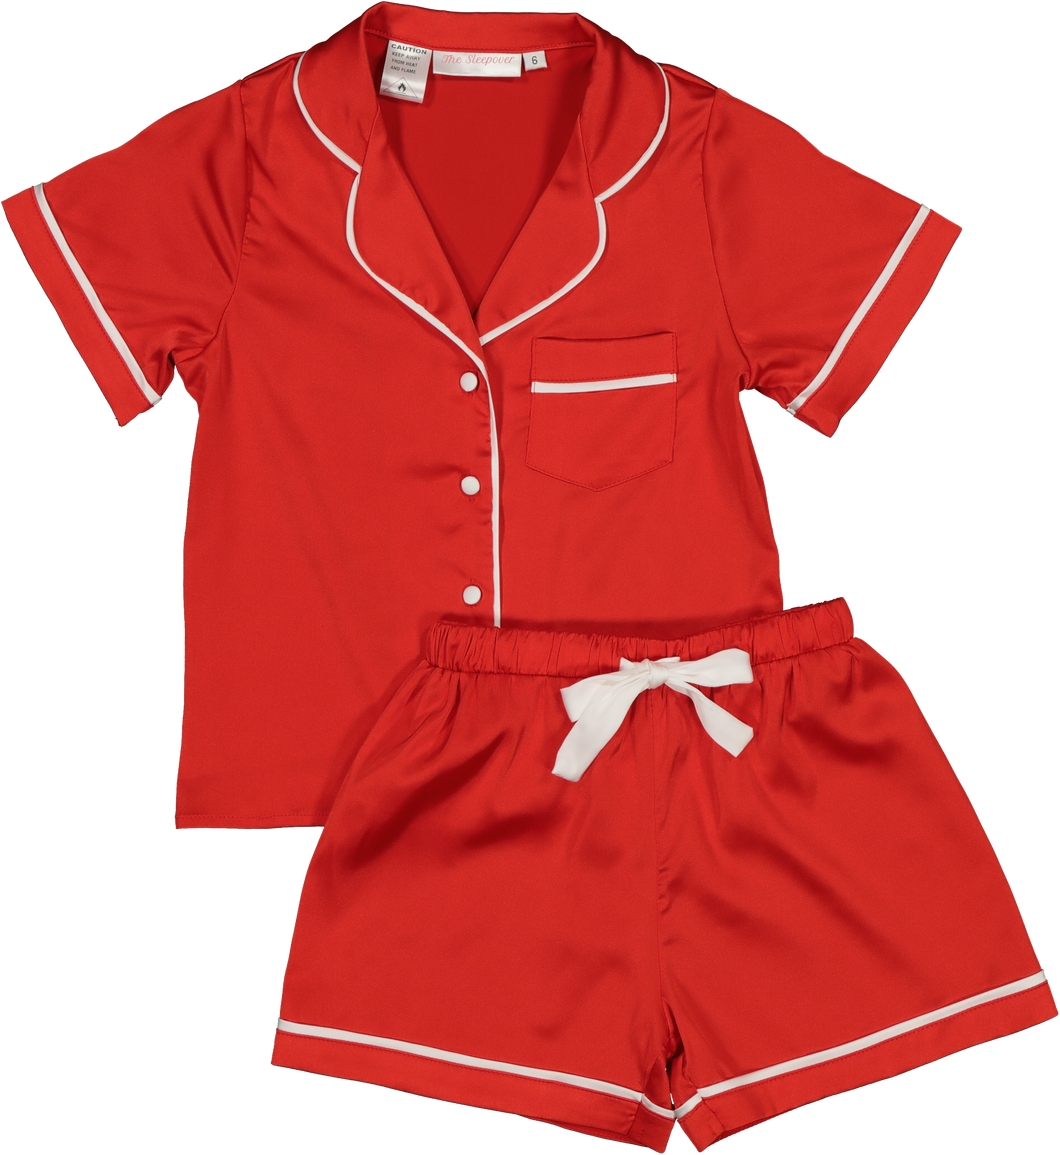 Sienna Mini Short PJ Set - Red/White